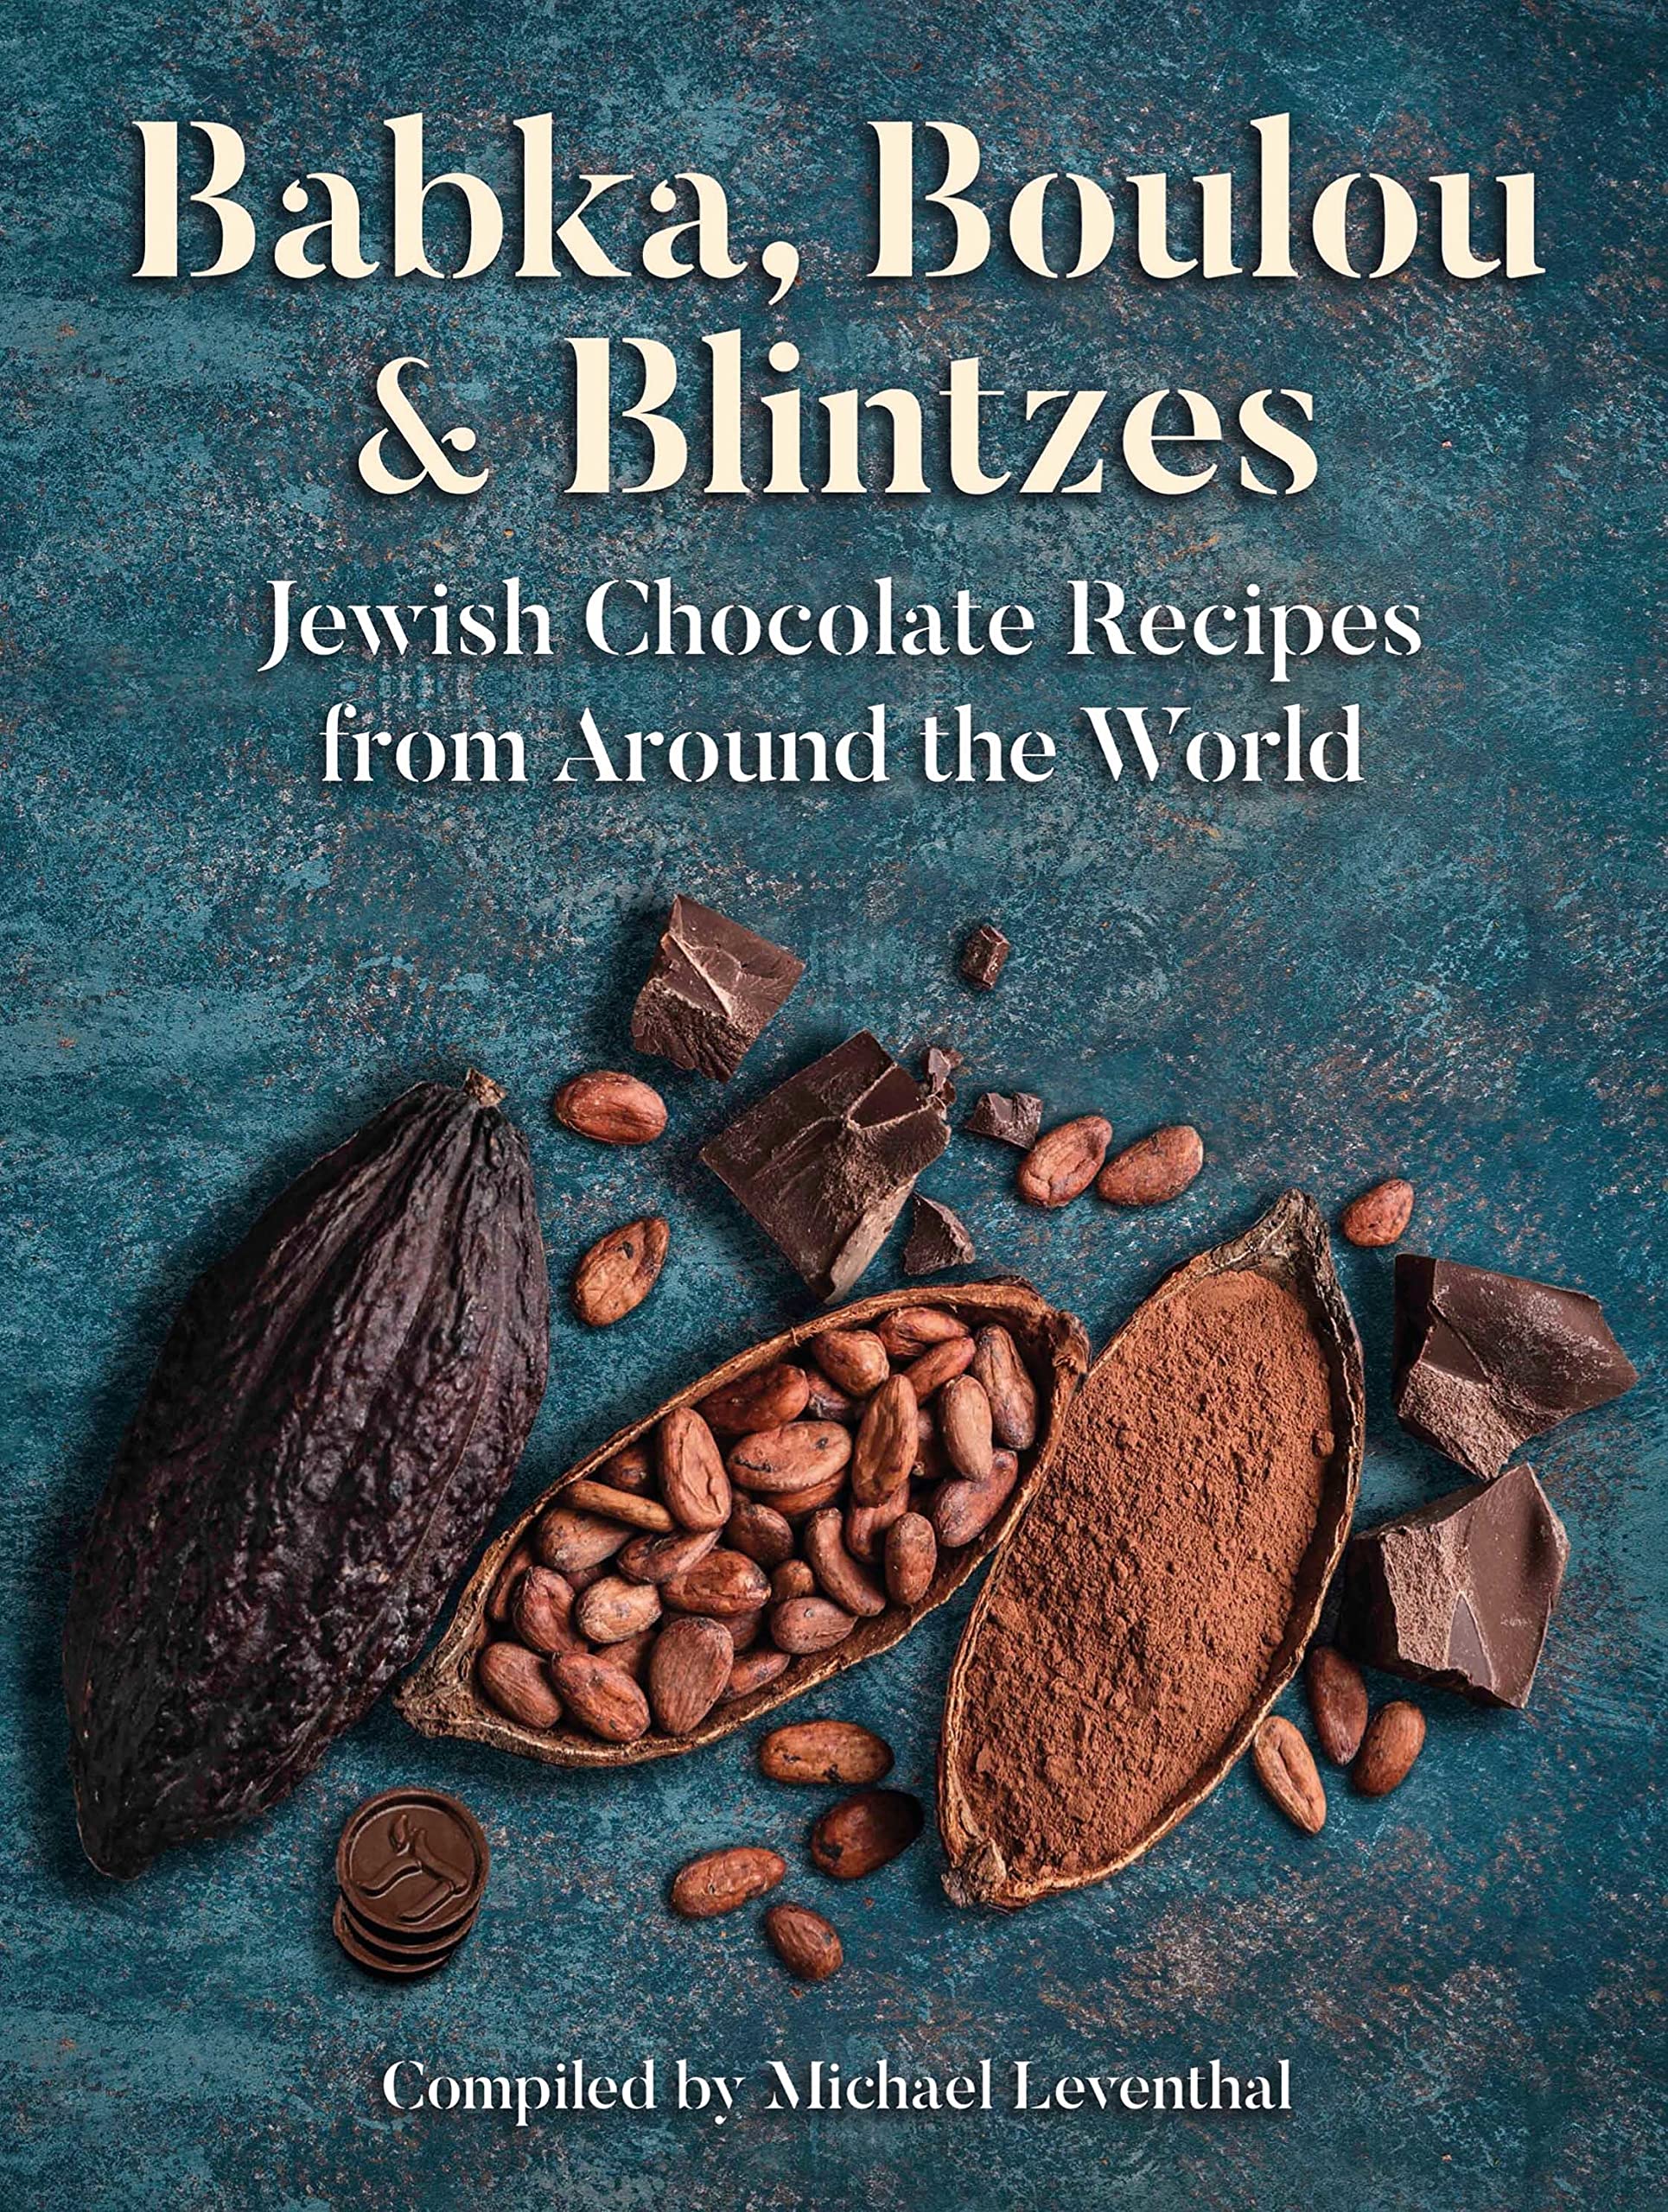 Babka, Boulou, & Blintzes: Jewish Chocolate Recipes from around the World (Michael Leventhal)